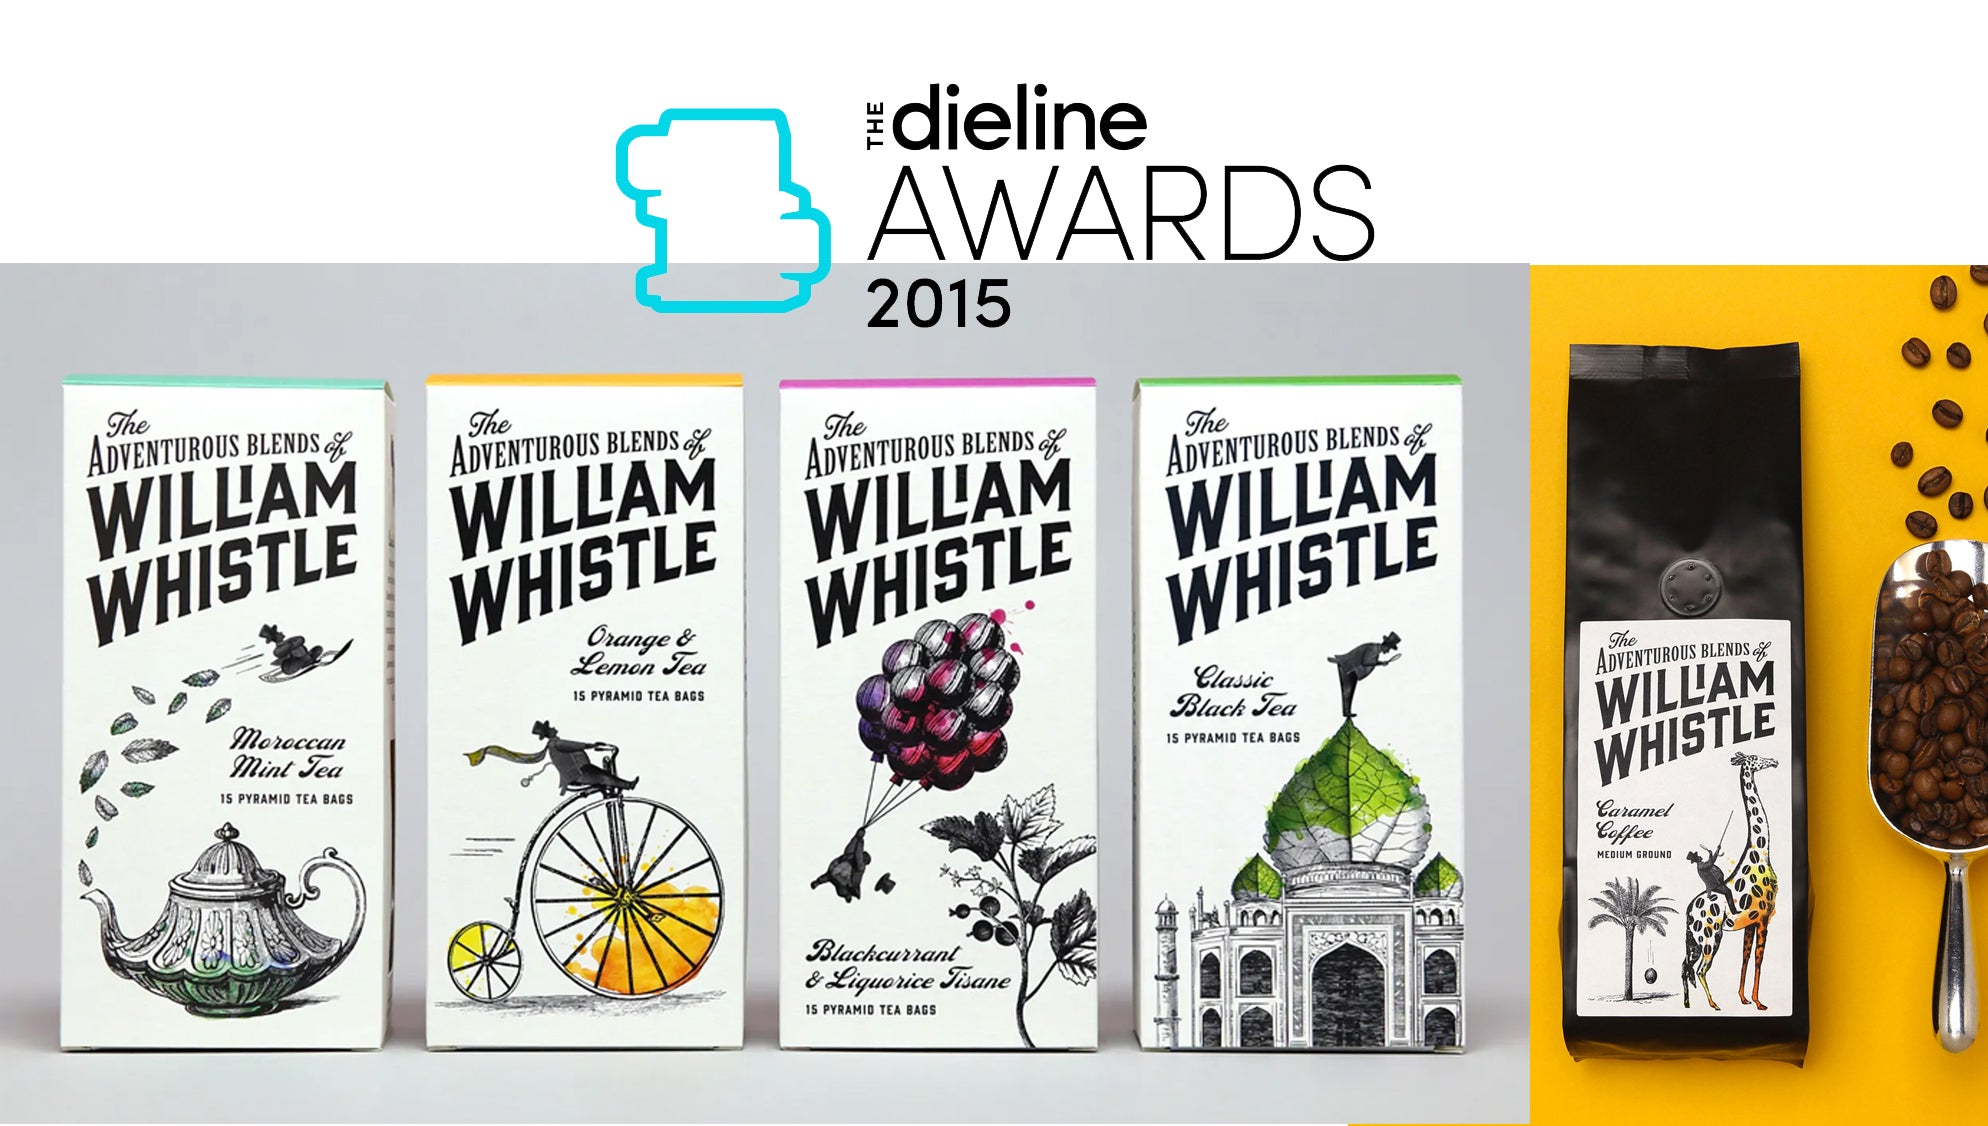 The Dieline Awards